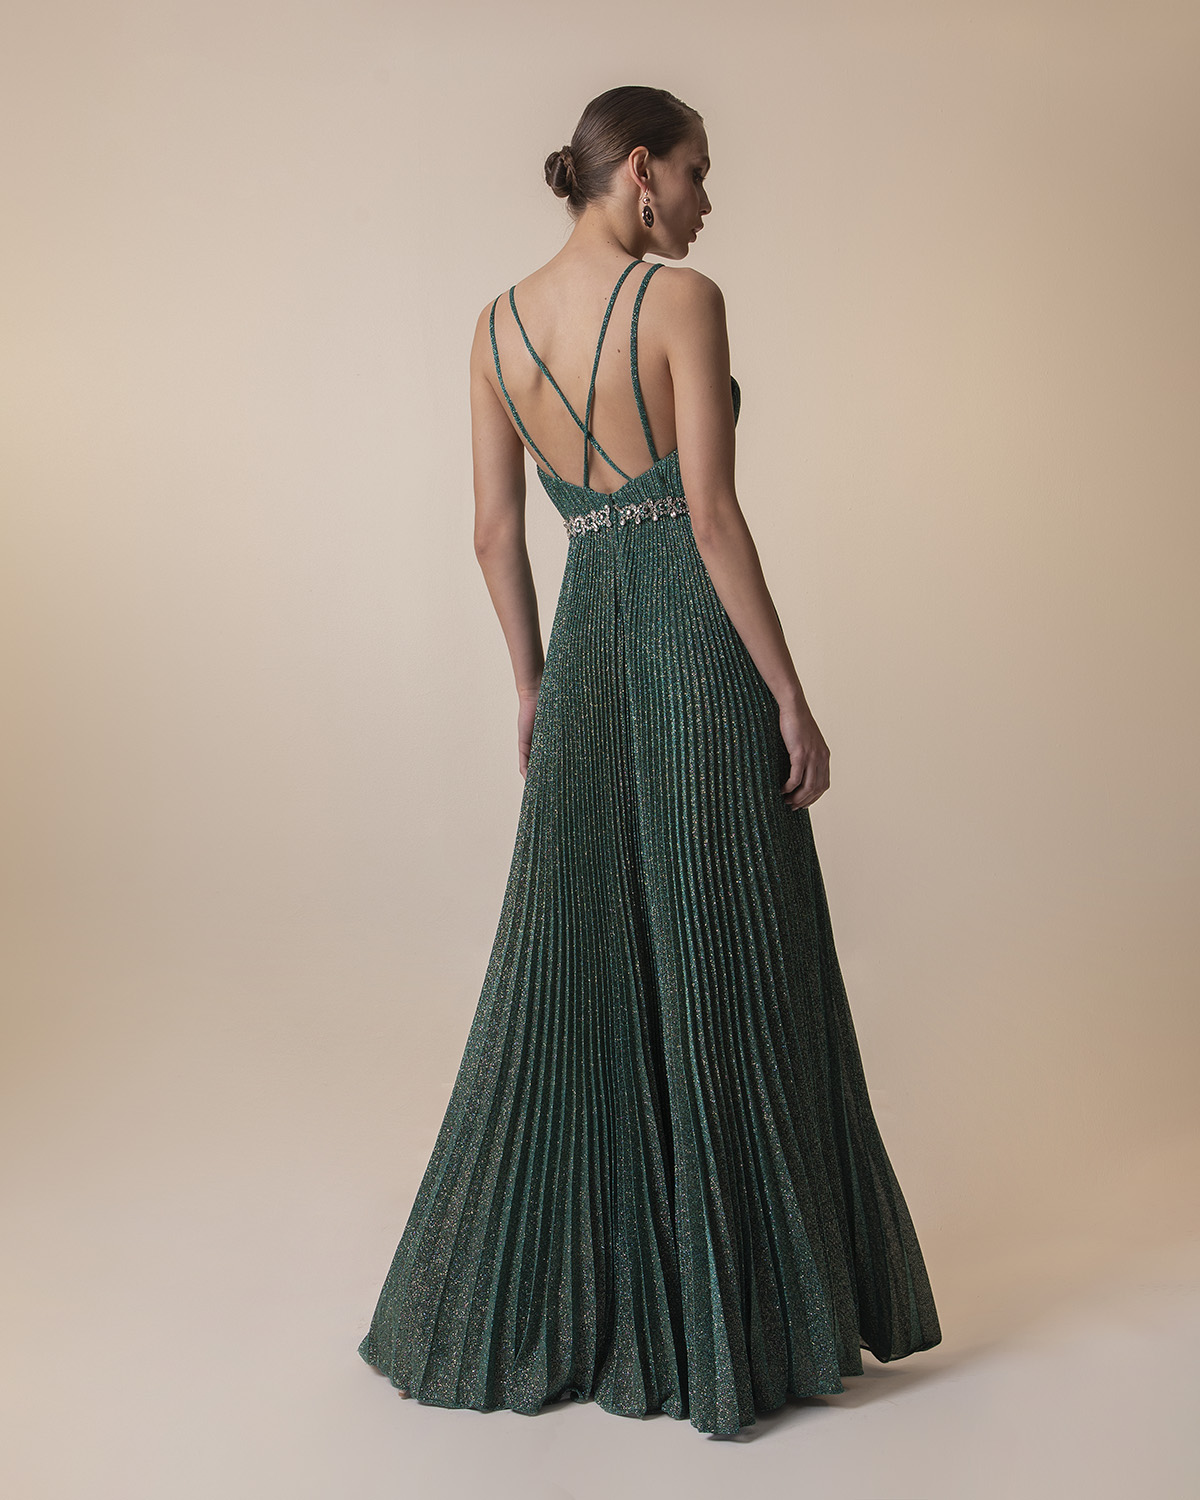 Вечерние платья / Long pleated evening dress with shining fabric and beading around the waist